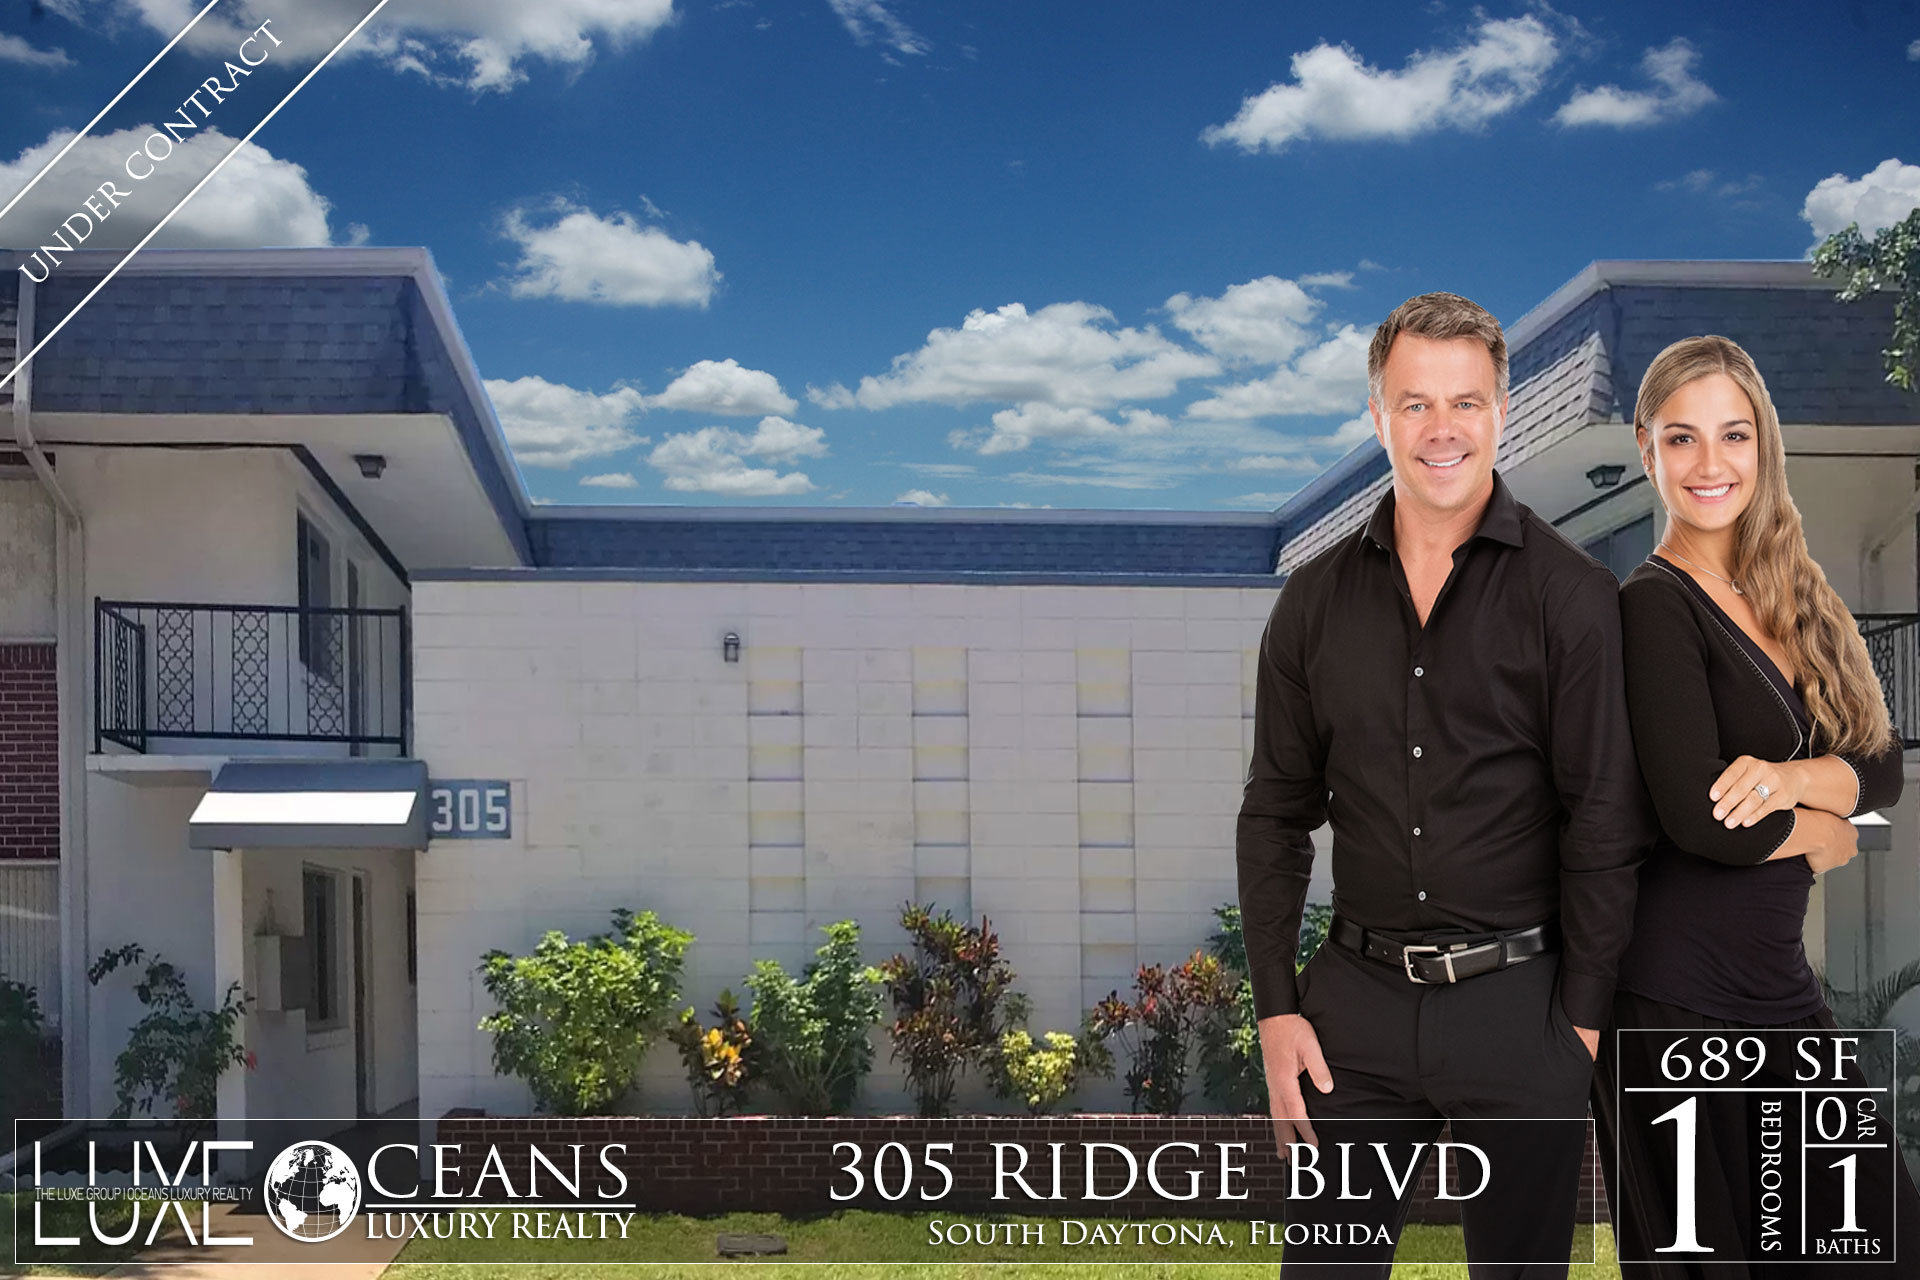 Sun Place Condos For Sale 305 Ridge Blvd South Daytona, FL Real Estate